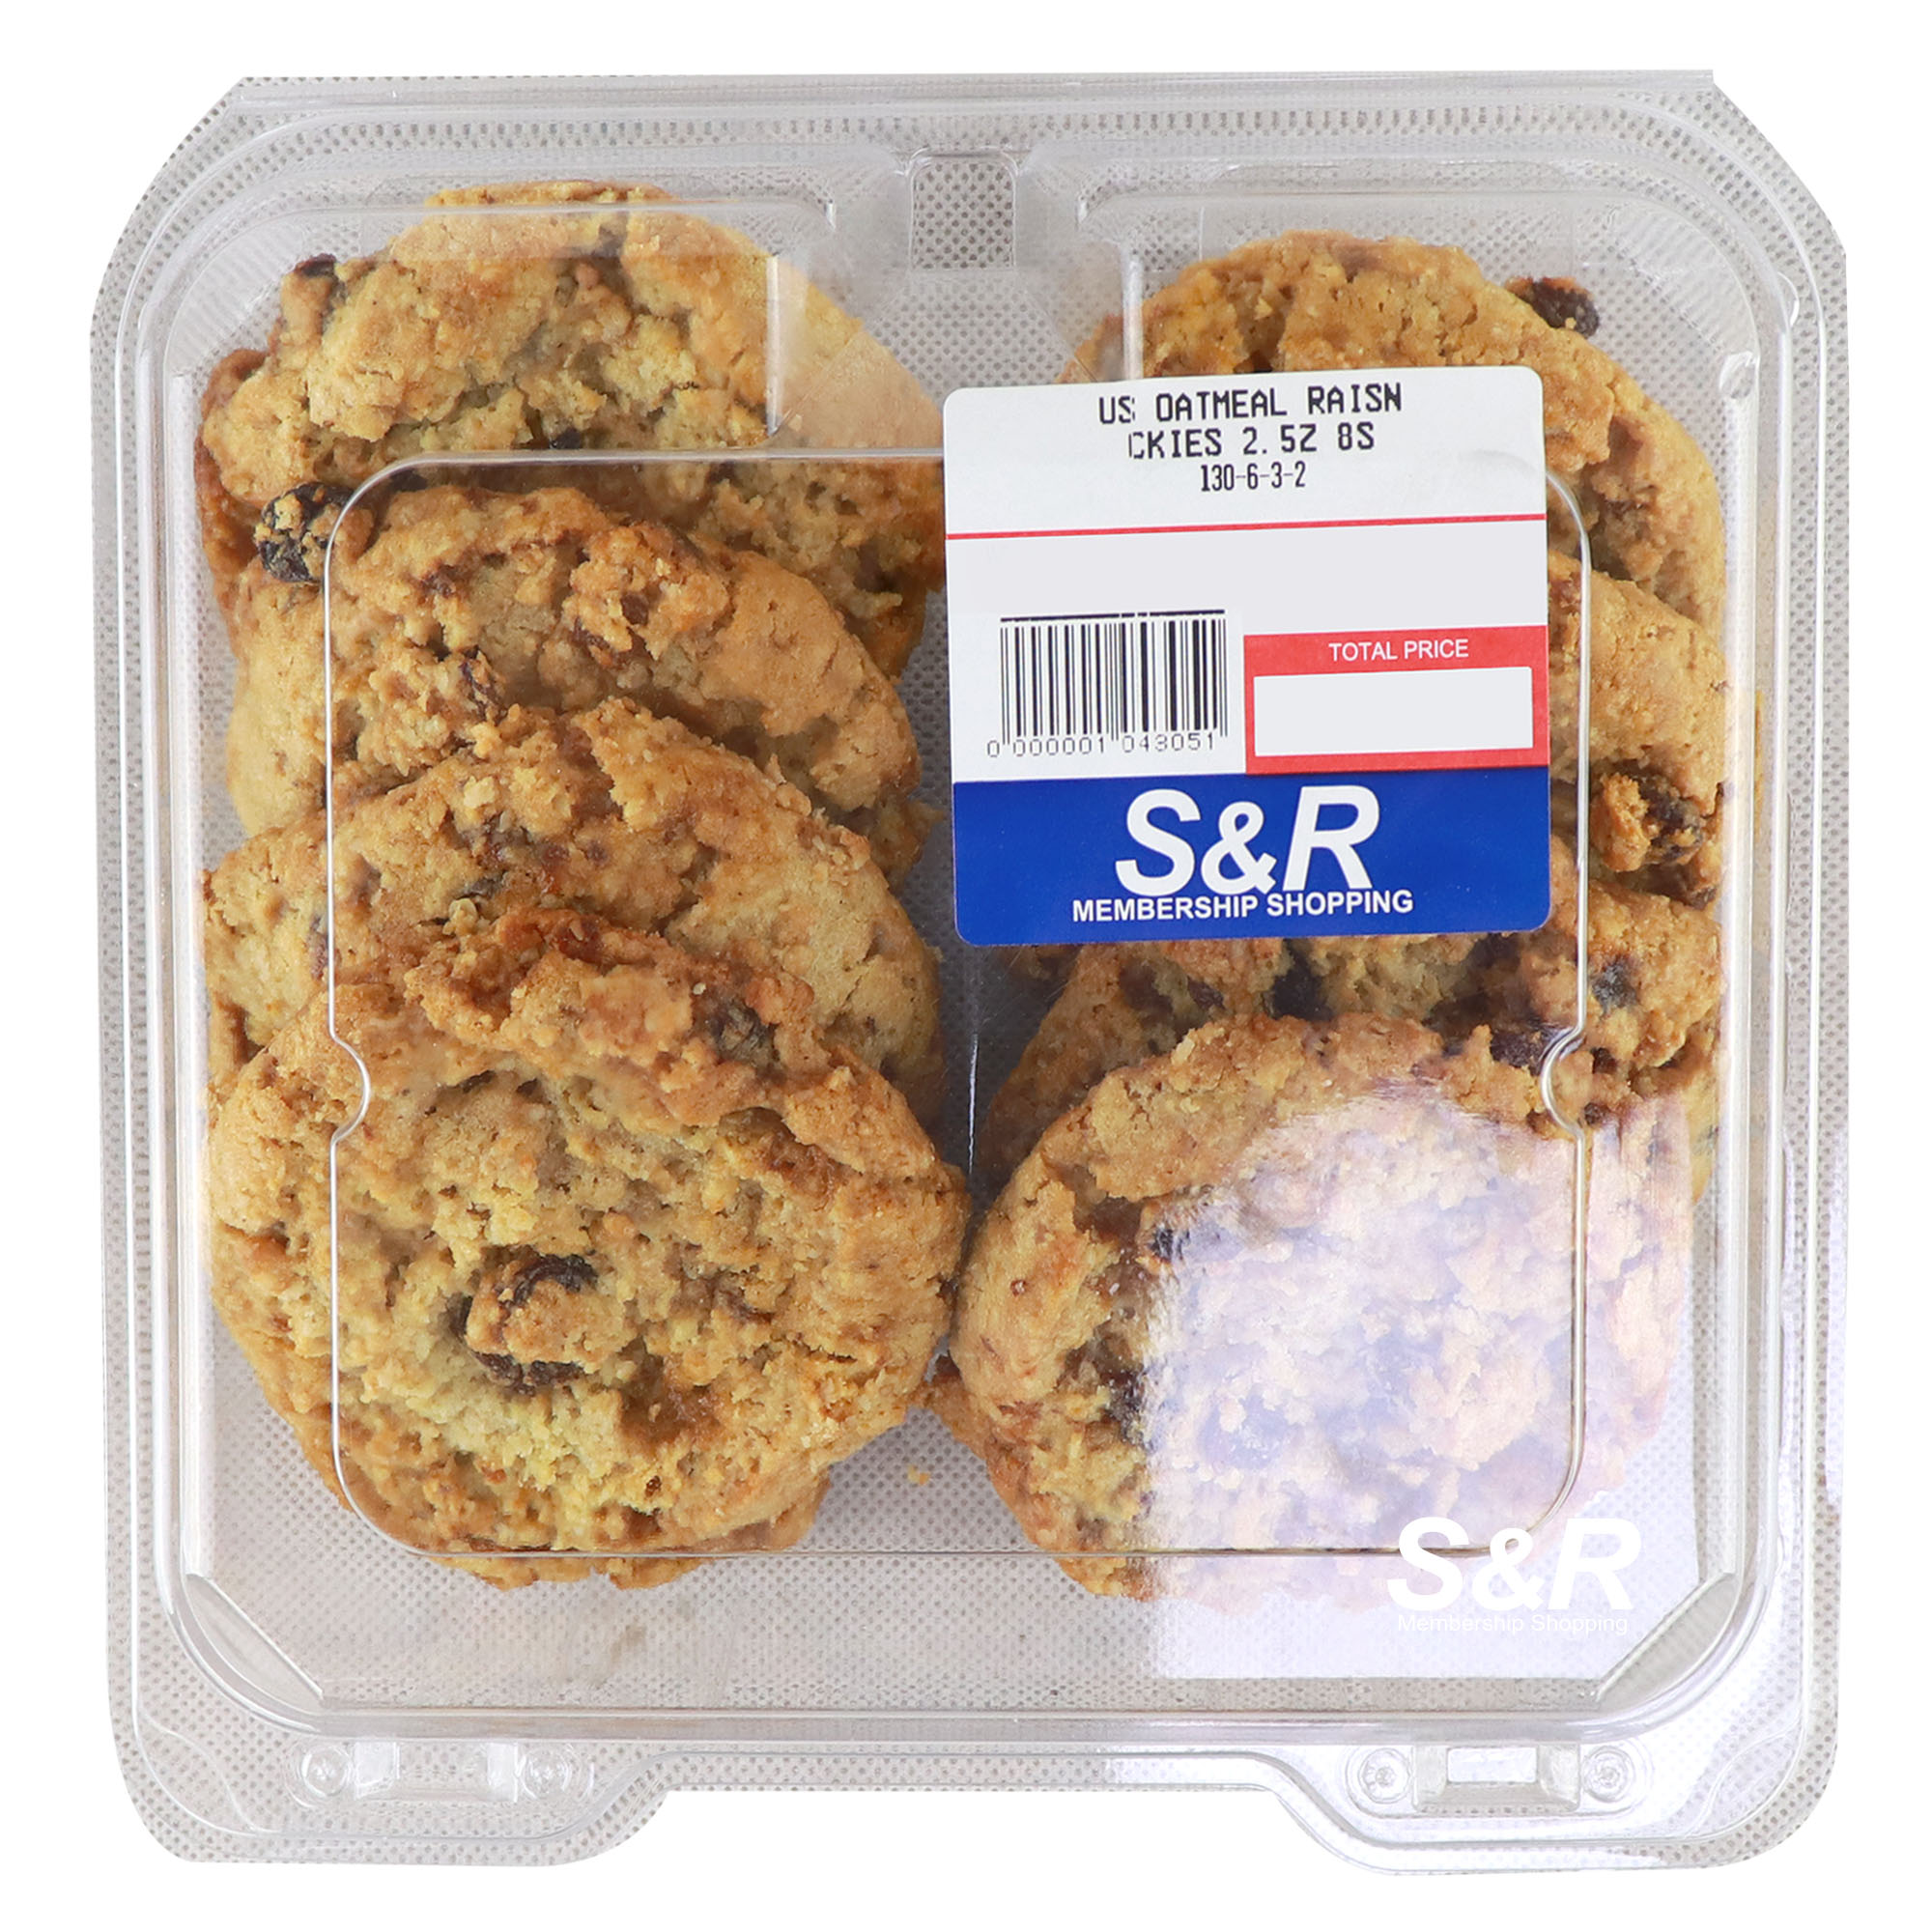 S&R US Oatmeal Raisin Cookies 8pcs